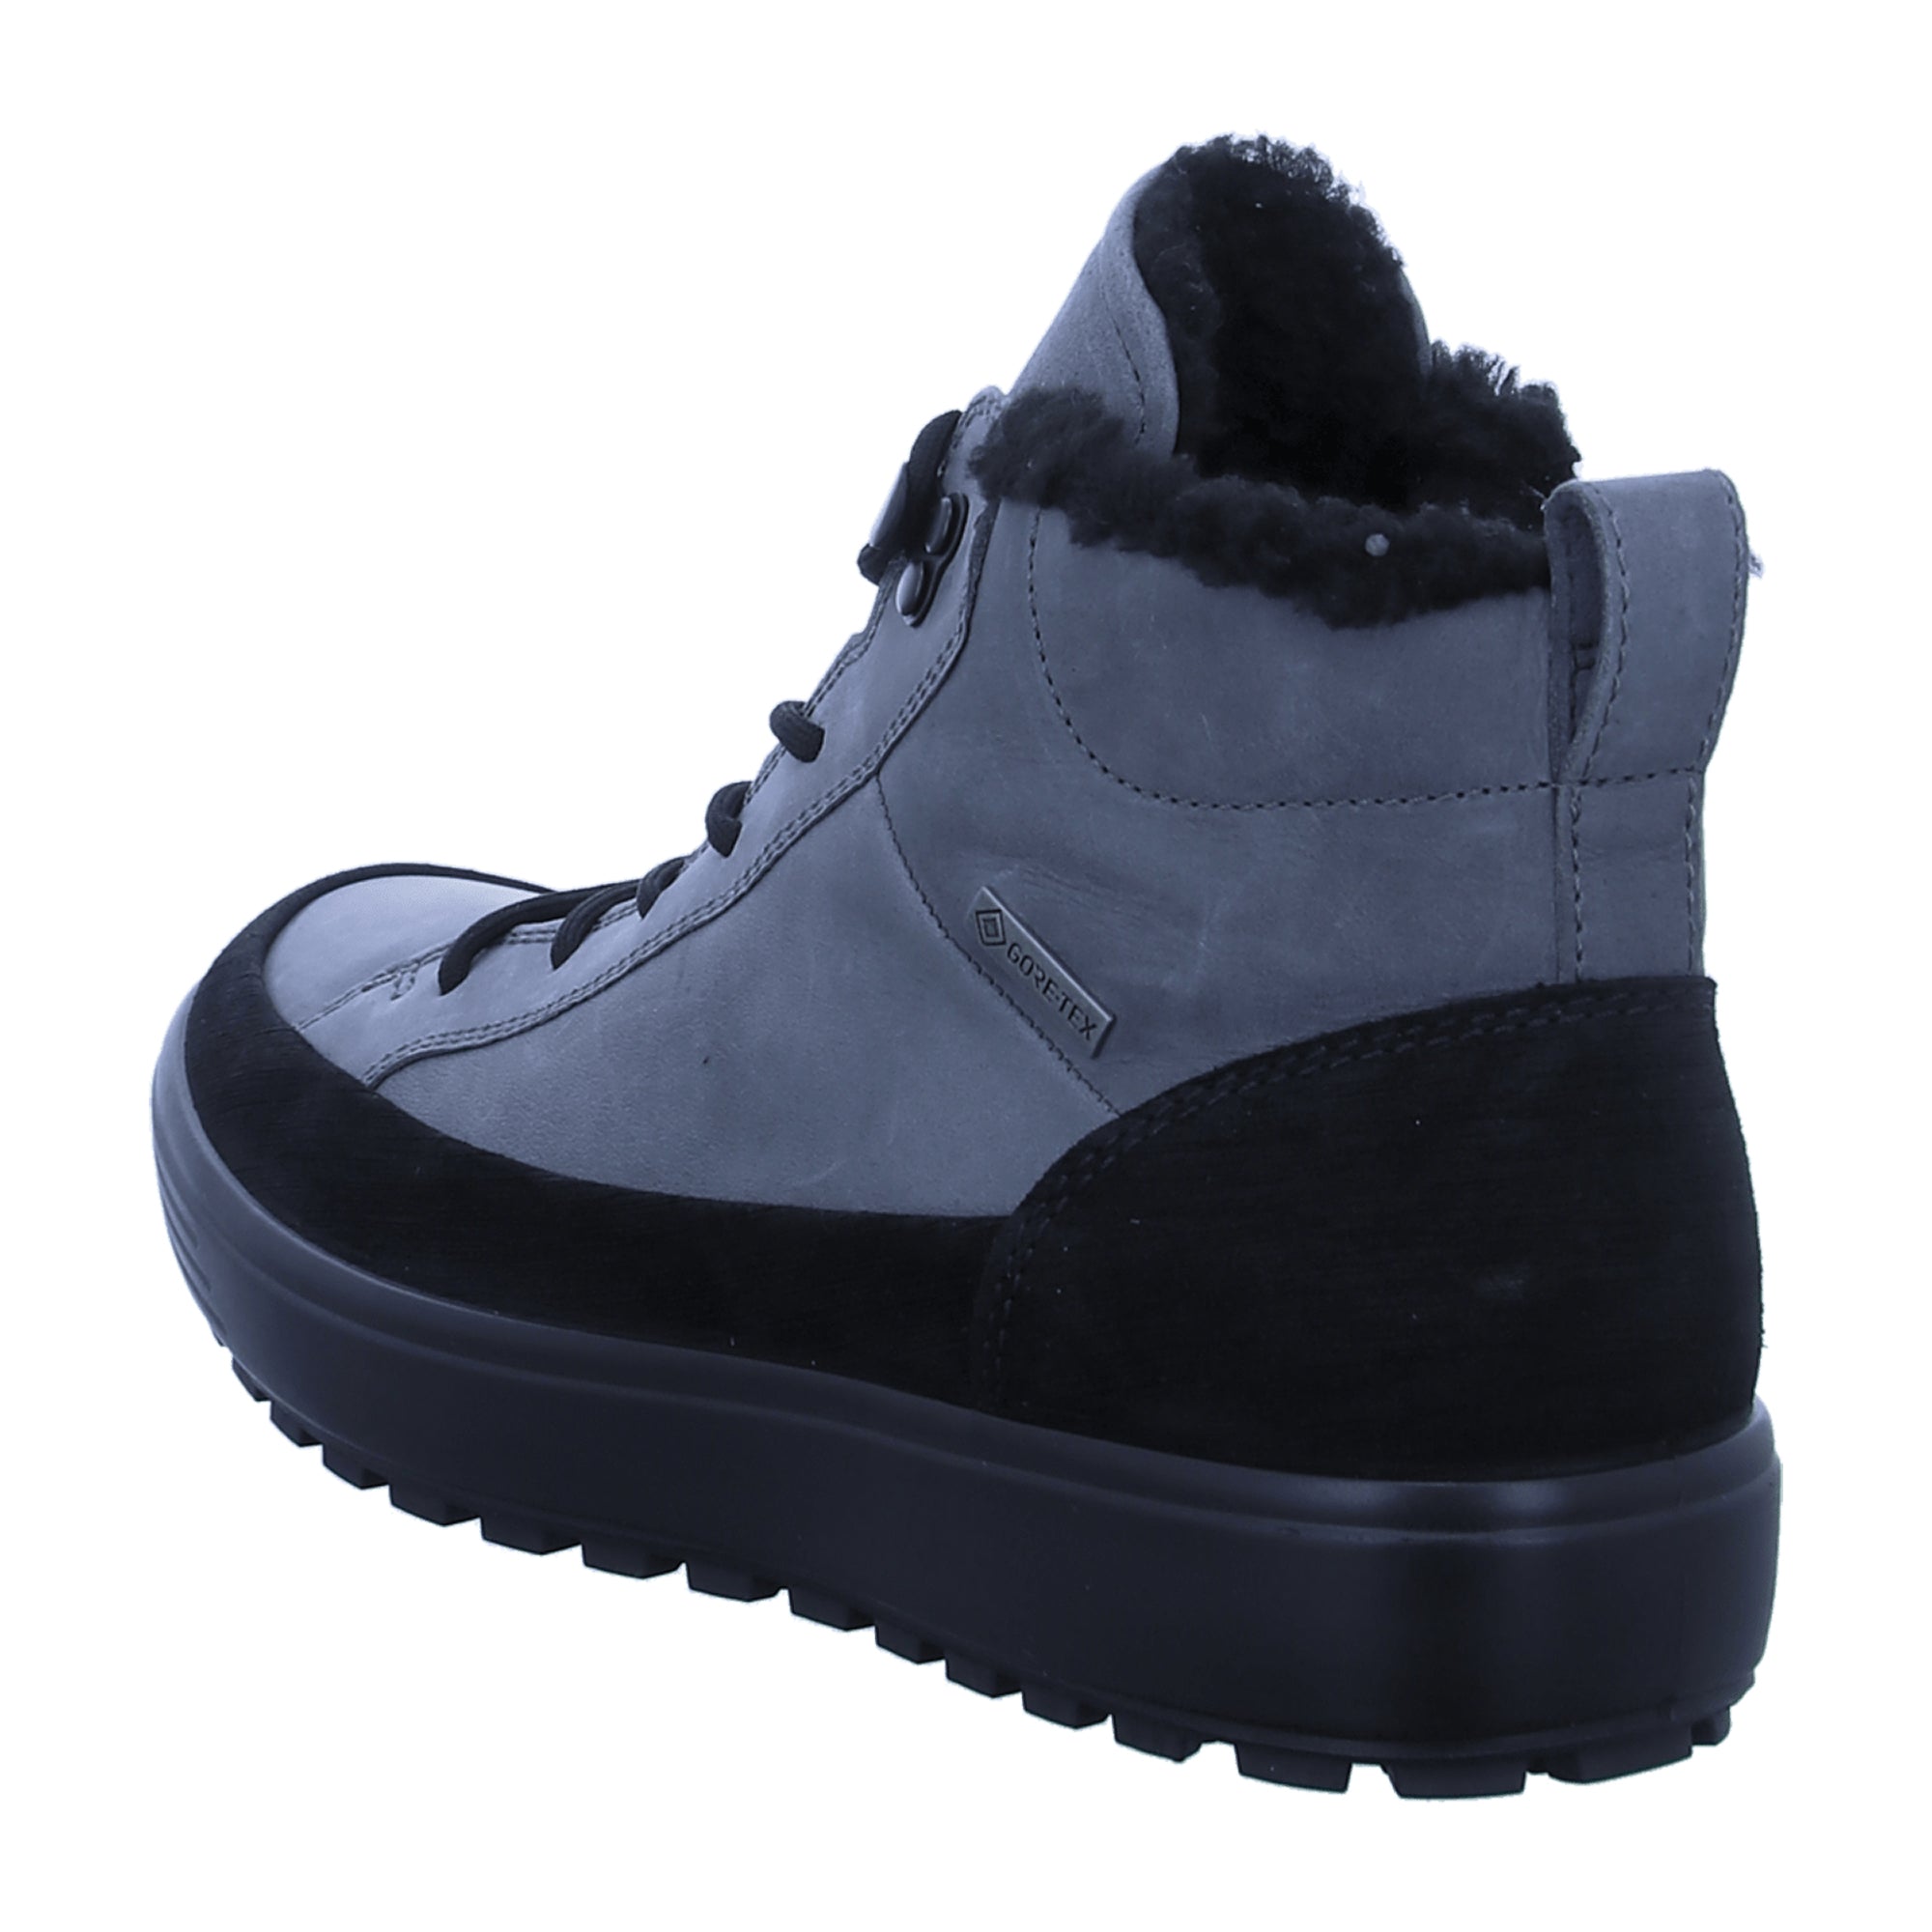 Ecco Men's 450444 Sneakers, Stylish Grey - Durable & Comfortable